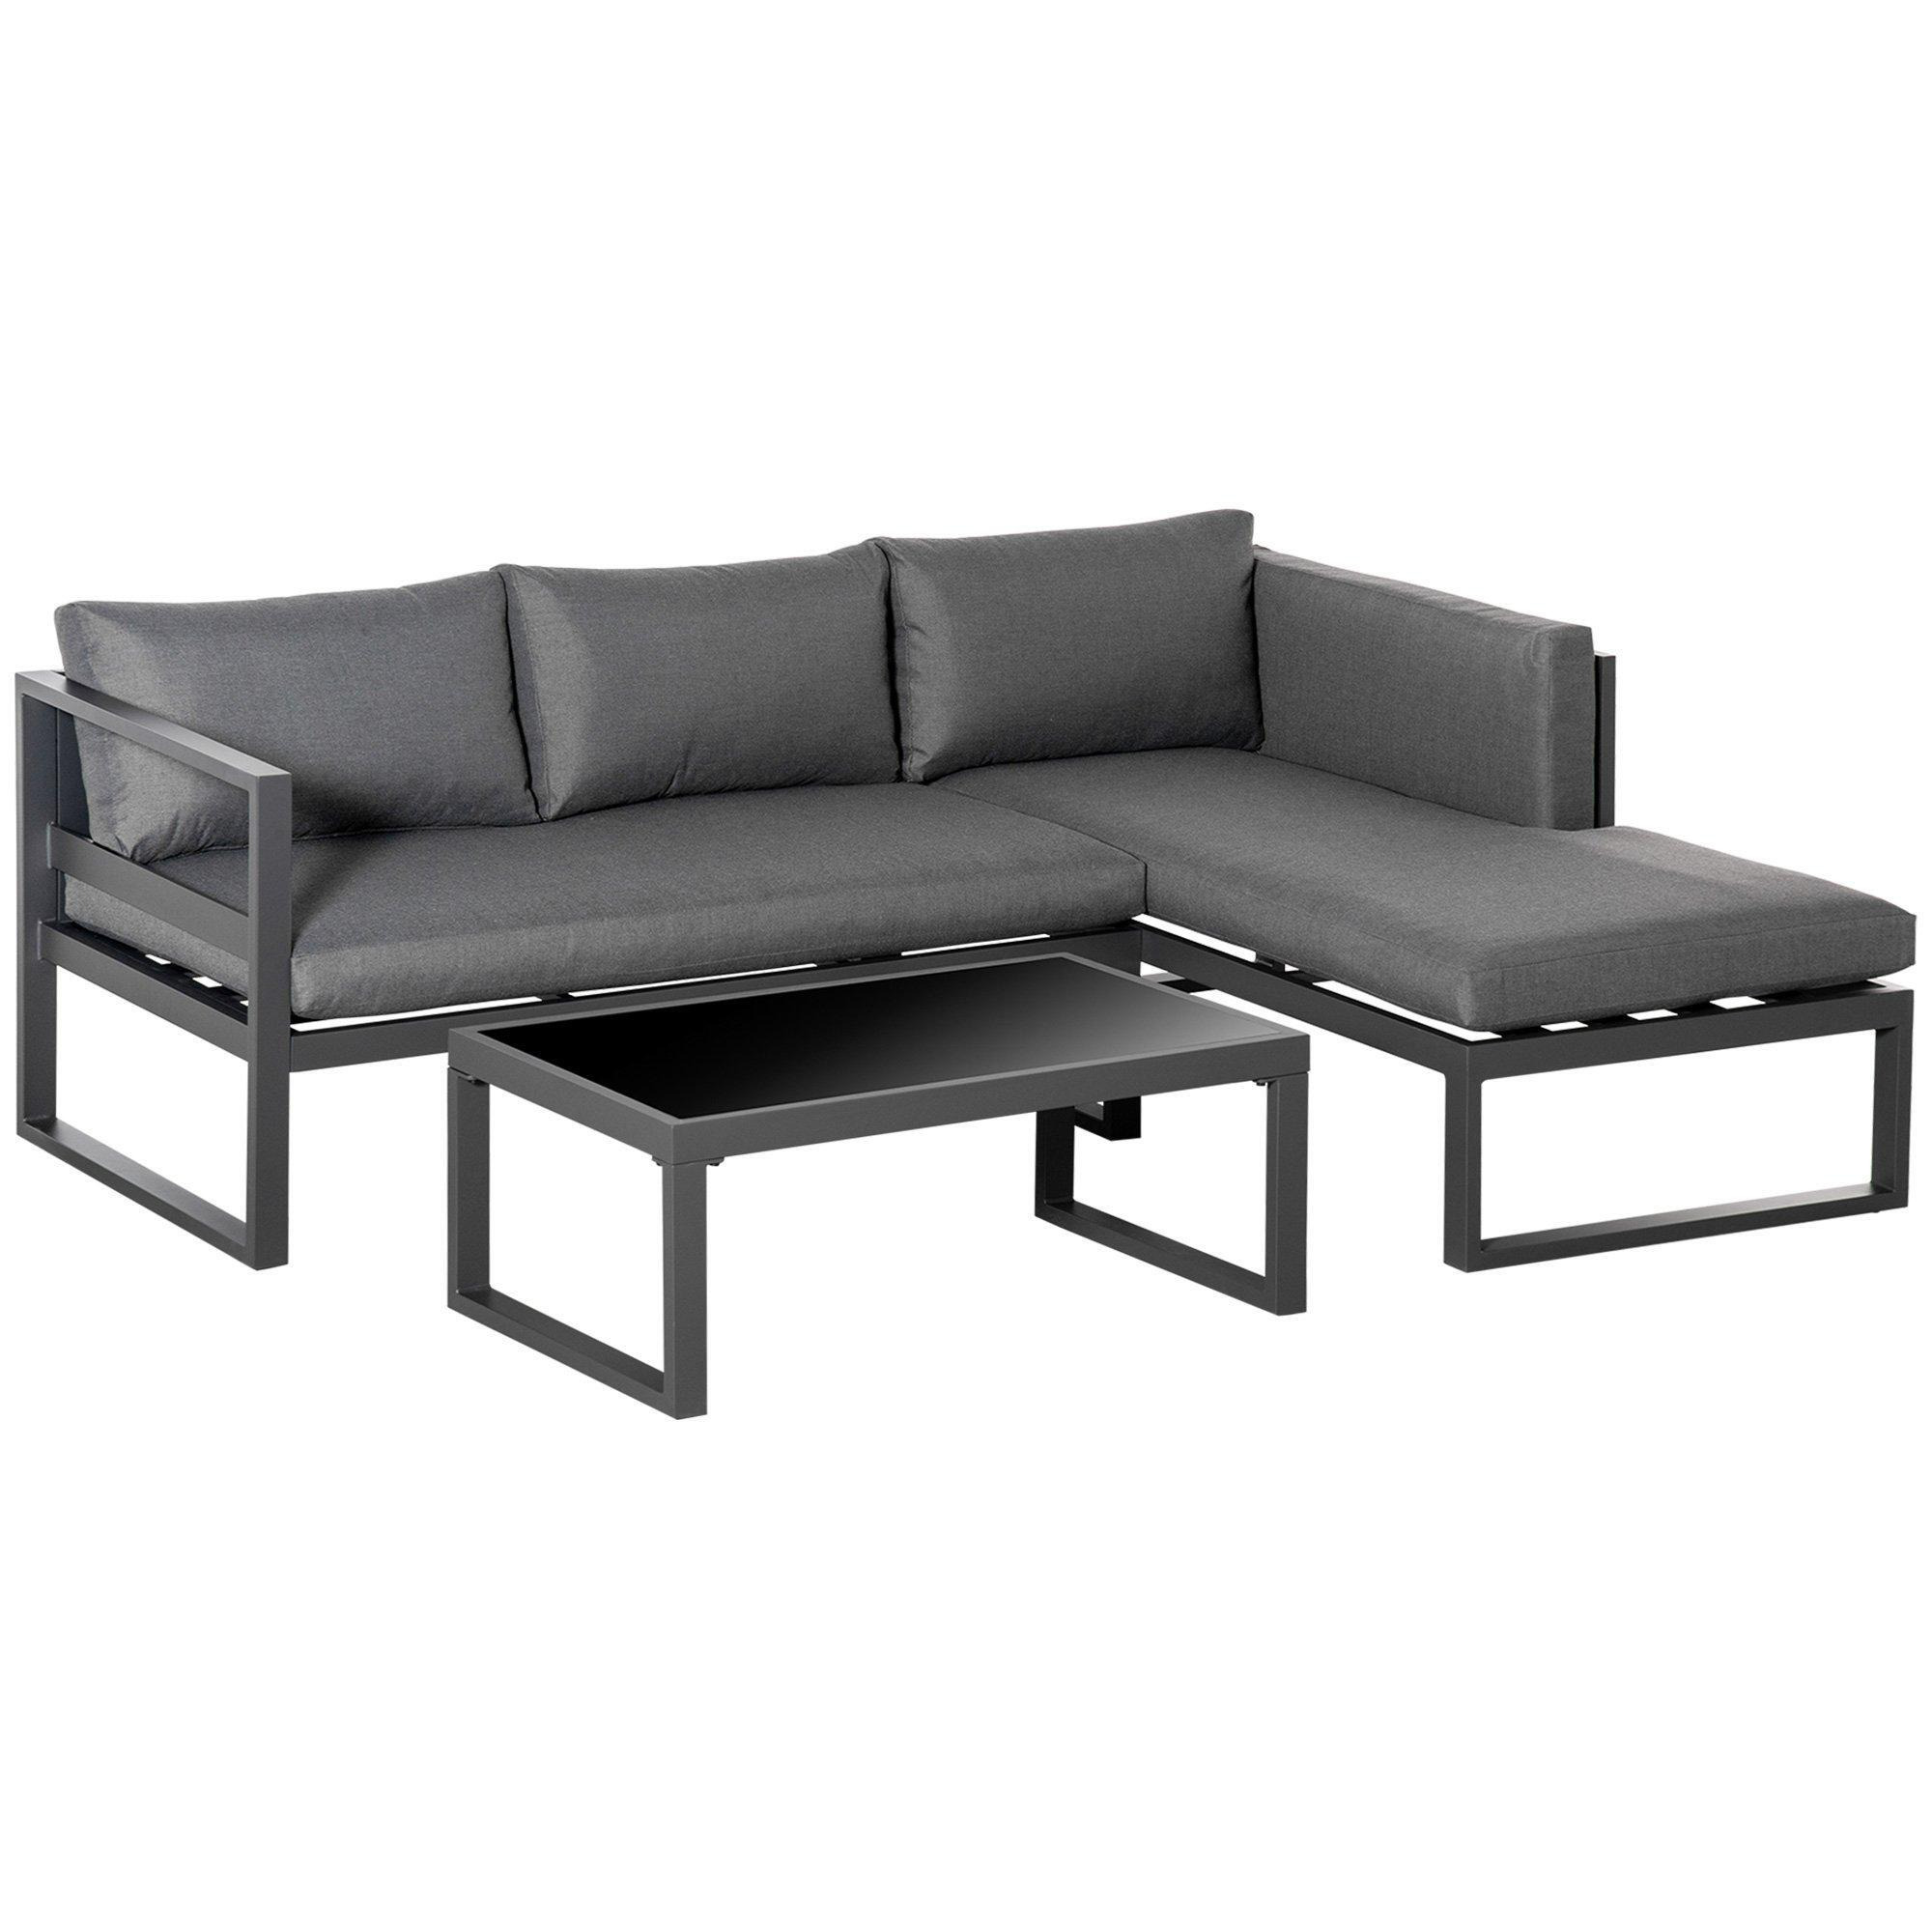 3 PCs L-shape Garden Corner Sofa Set with Padded Cushions, Aluminium - image 1